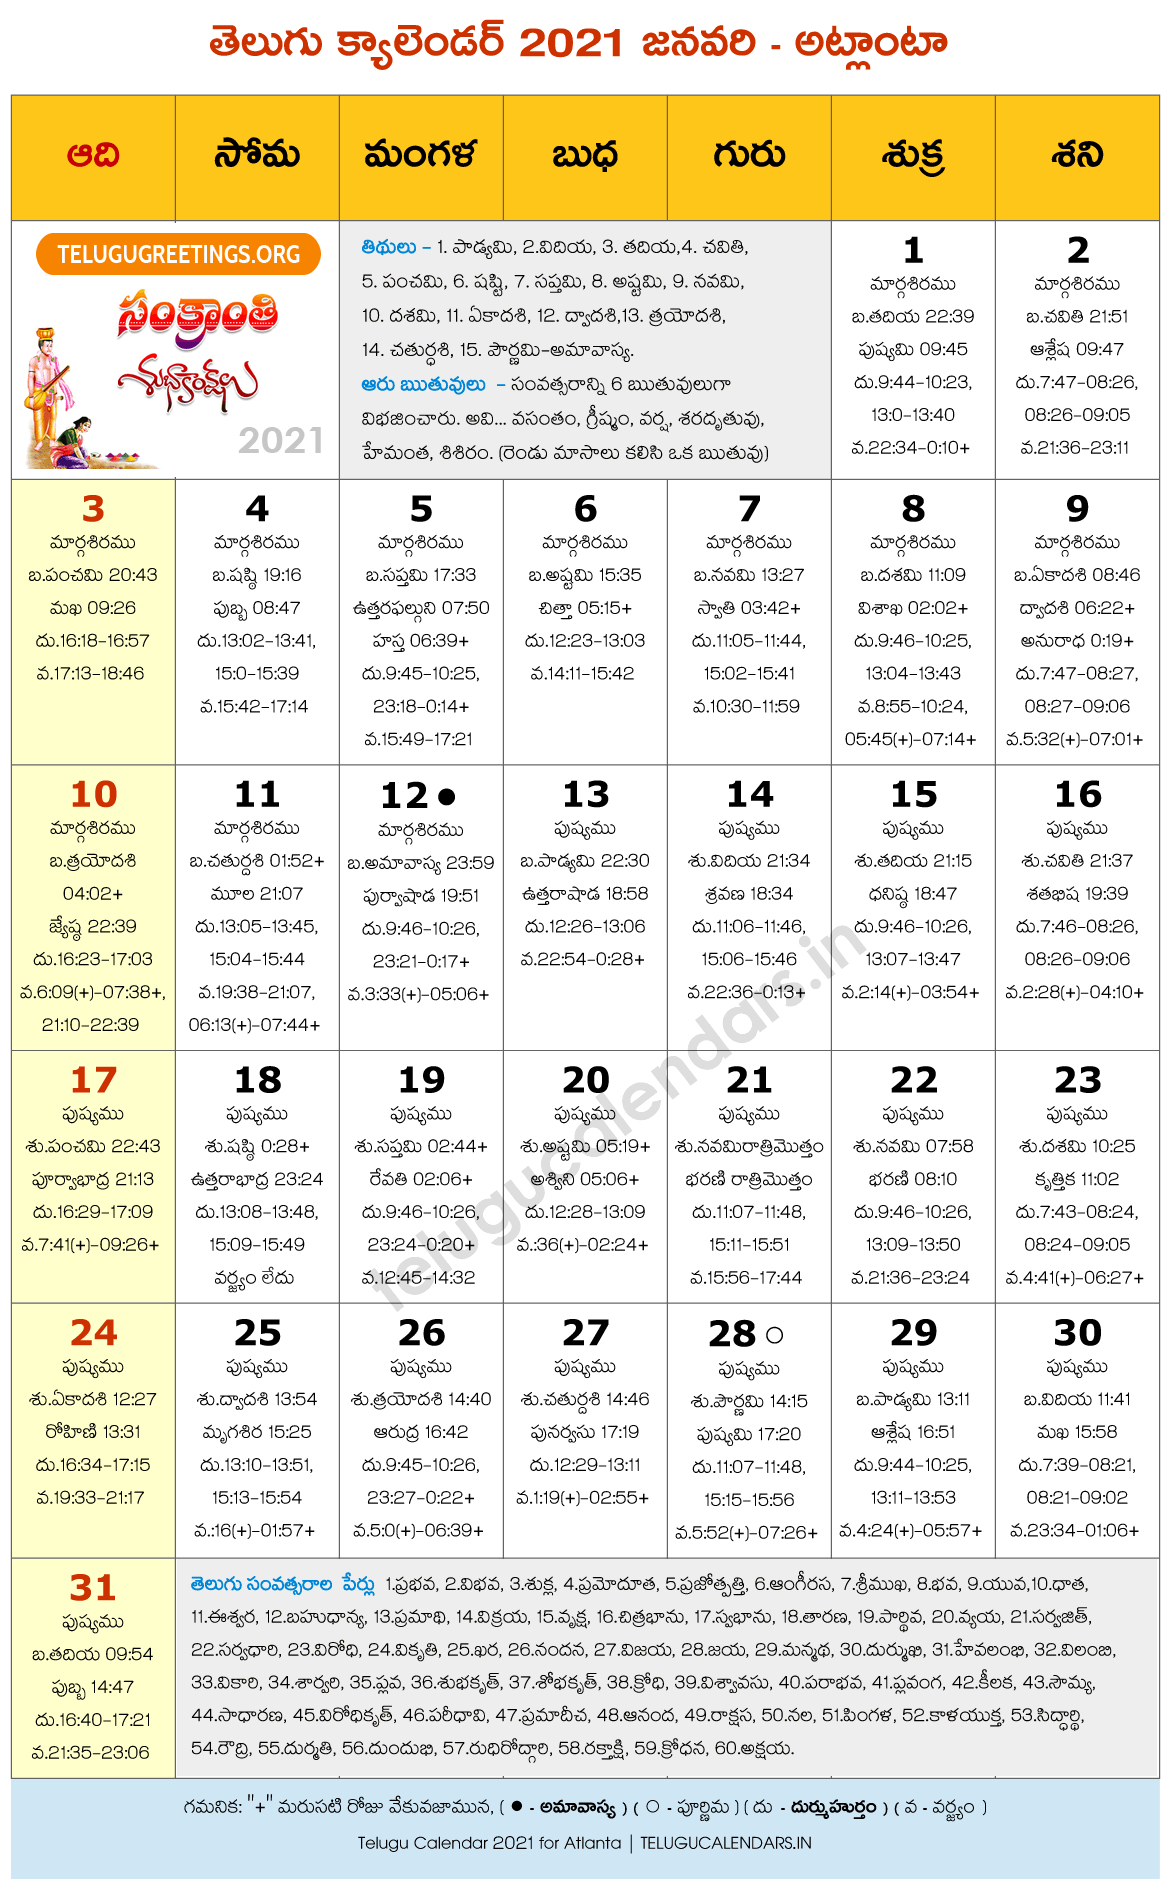 Atlanta Telugu Calendar 2022 - December Calendar 2022